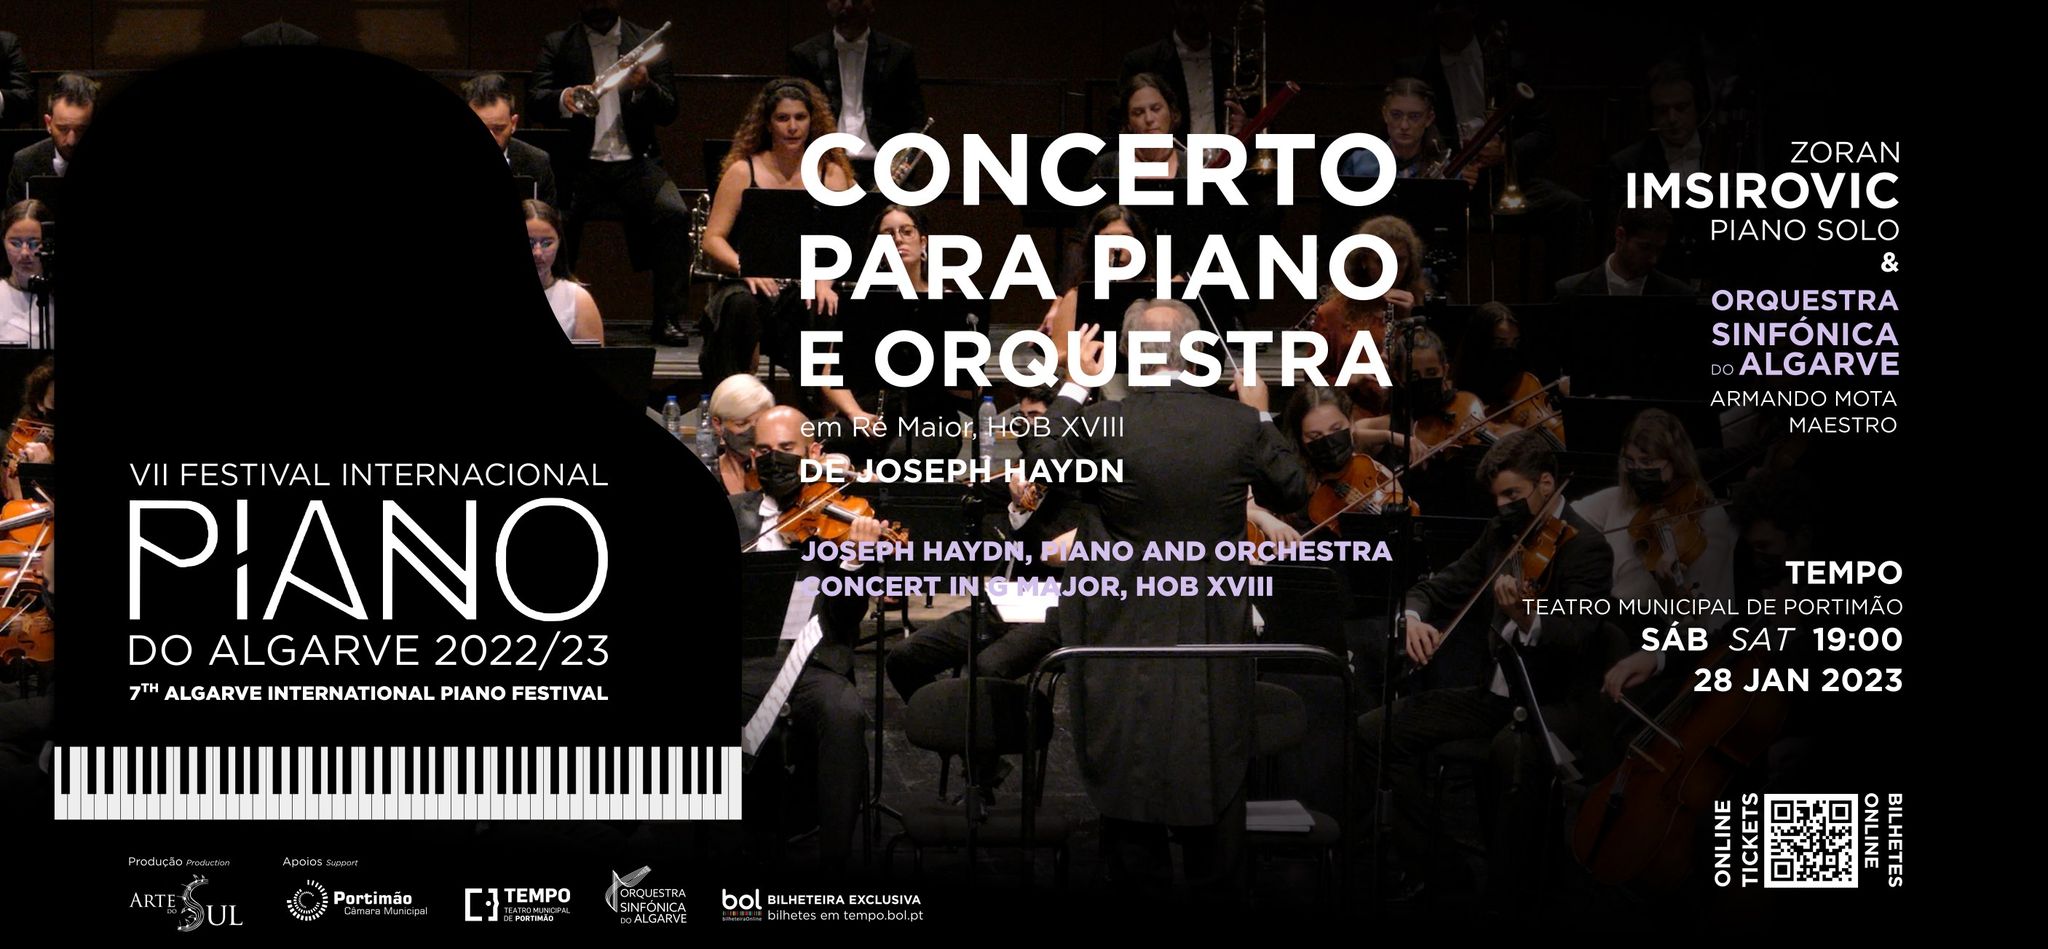 Zoran Imsirovic & Orquestra Sinfónica do Algarve | VII Festival Internacional de Piano do Algarve   